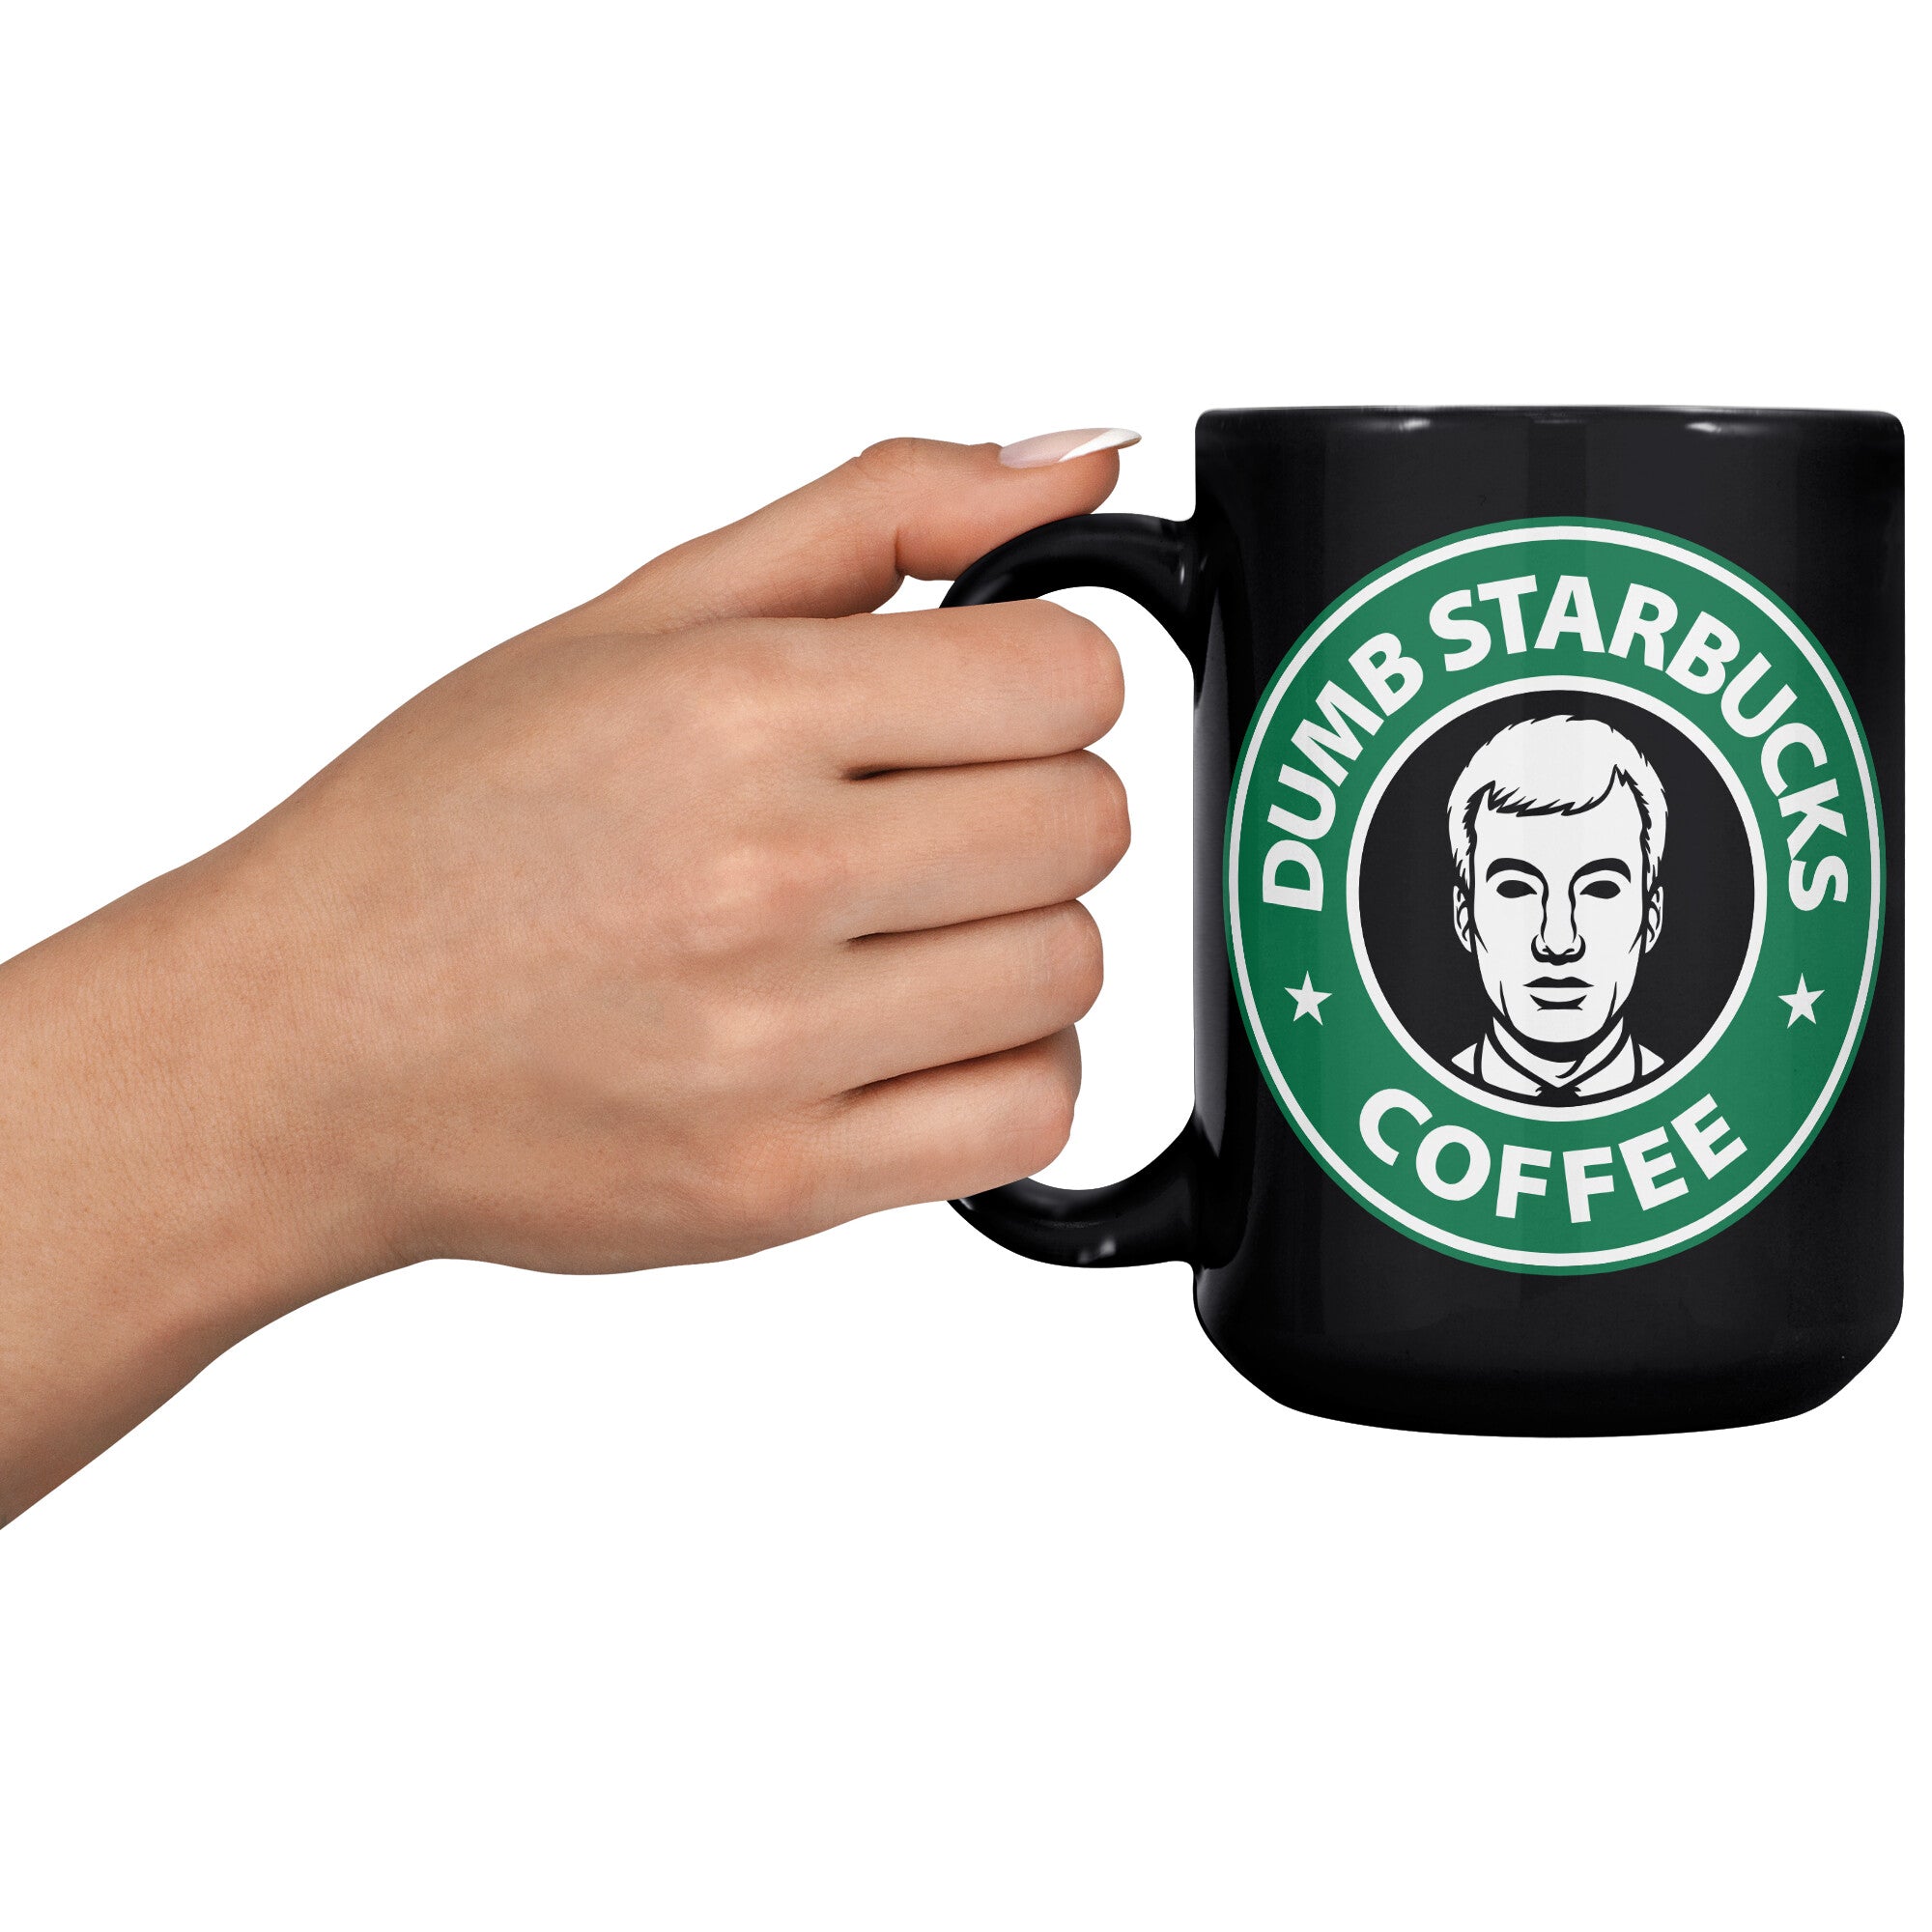 Nathan for You Dumb Starbucks Coffee Mug or Tea Cup Travel Mug by BeeGeeTees White Ceramic / 15 oz Ceramic